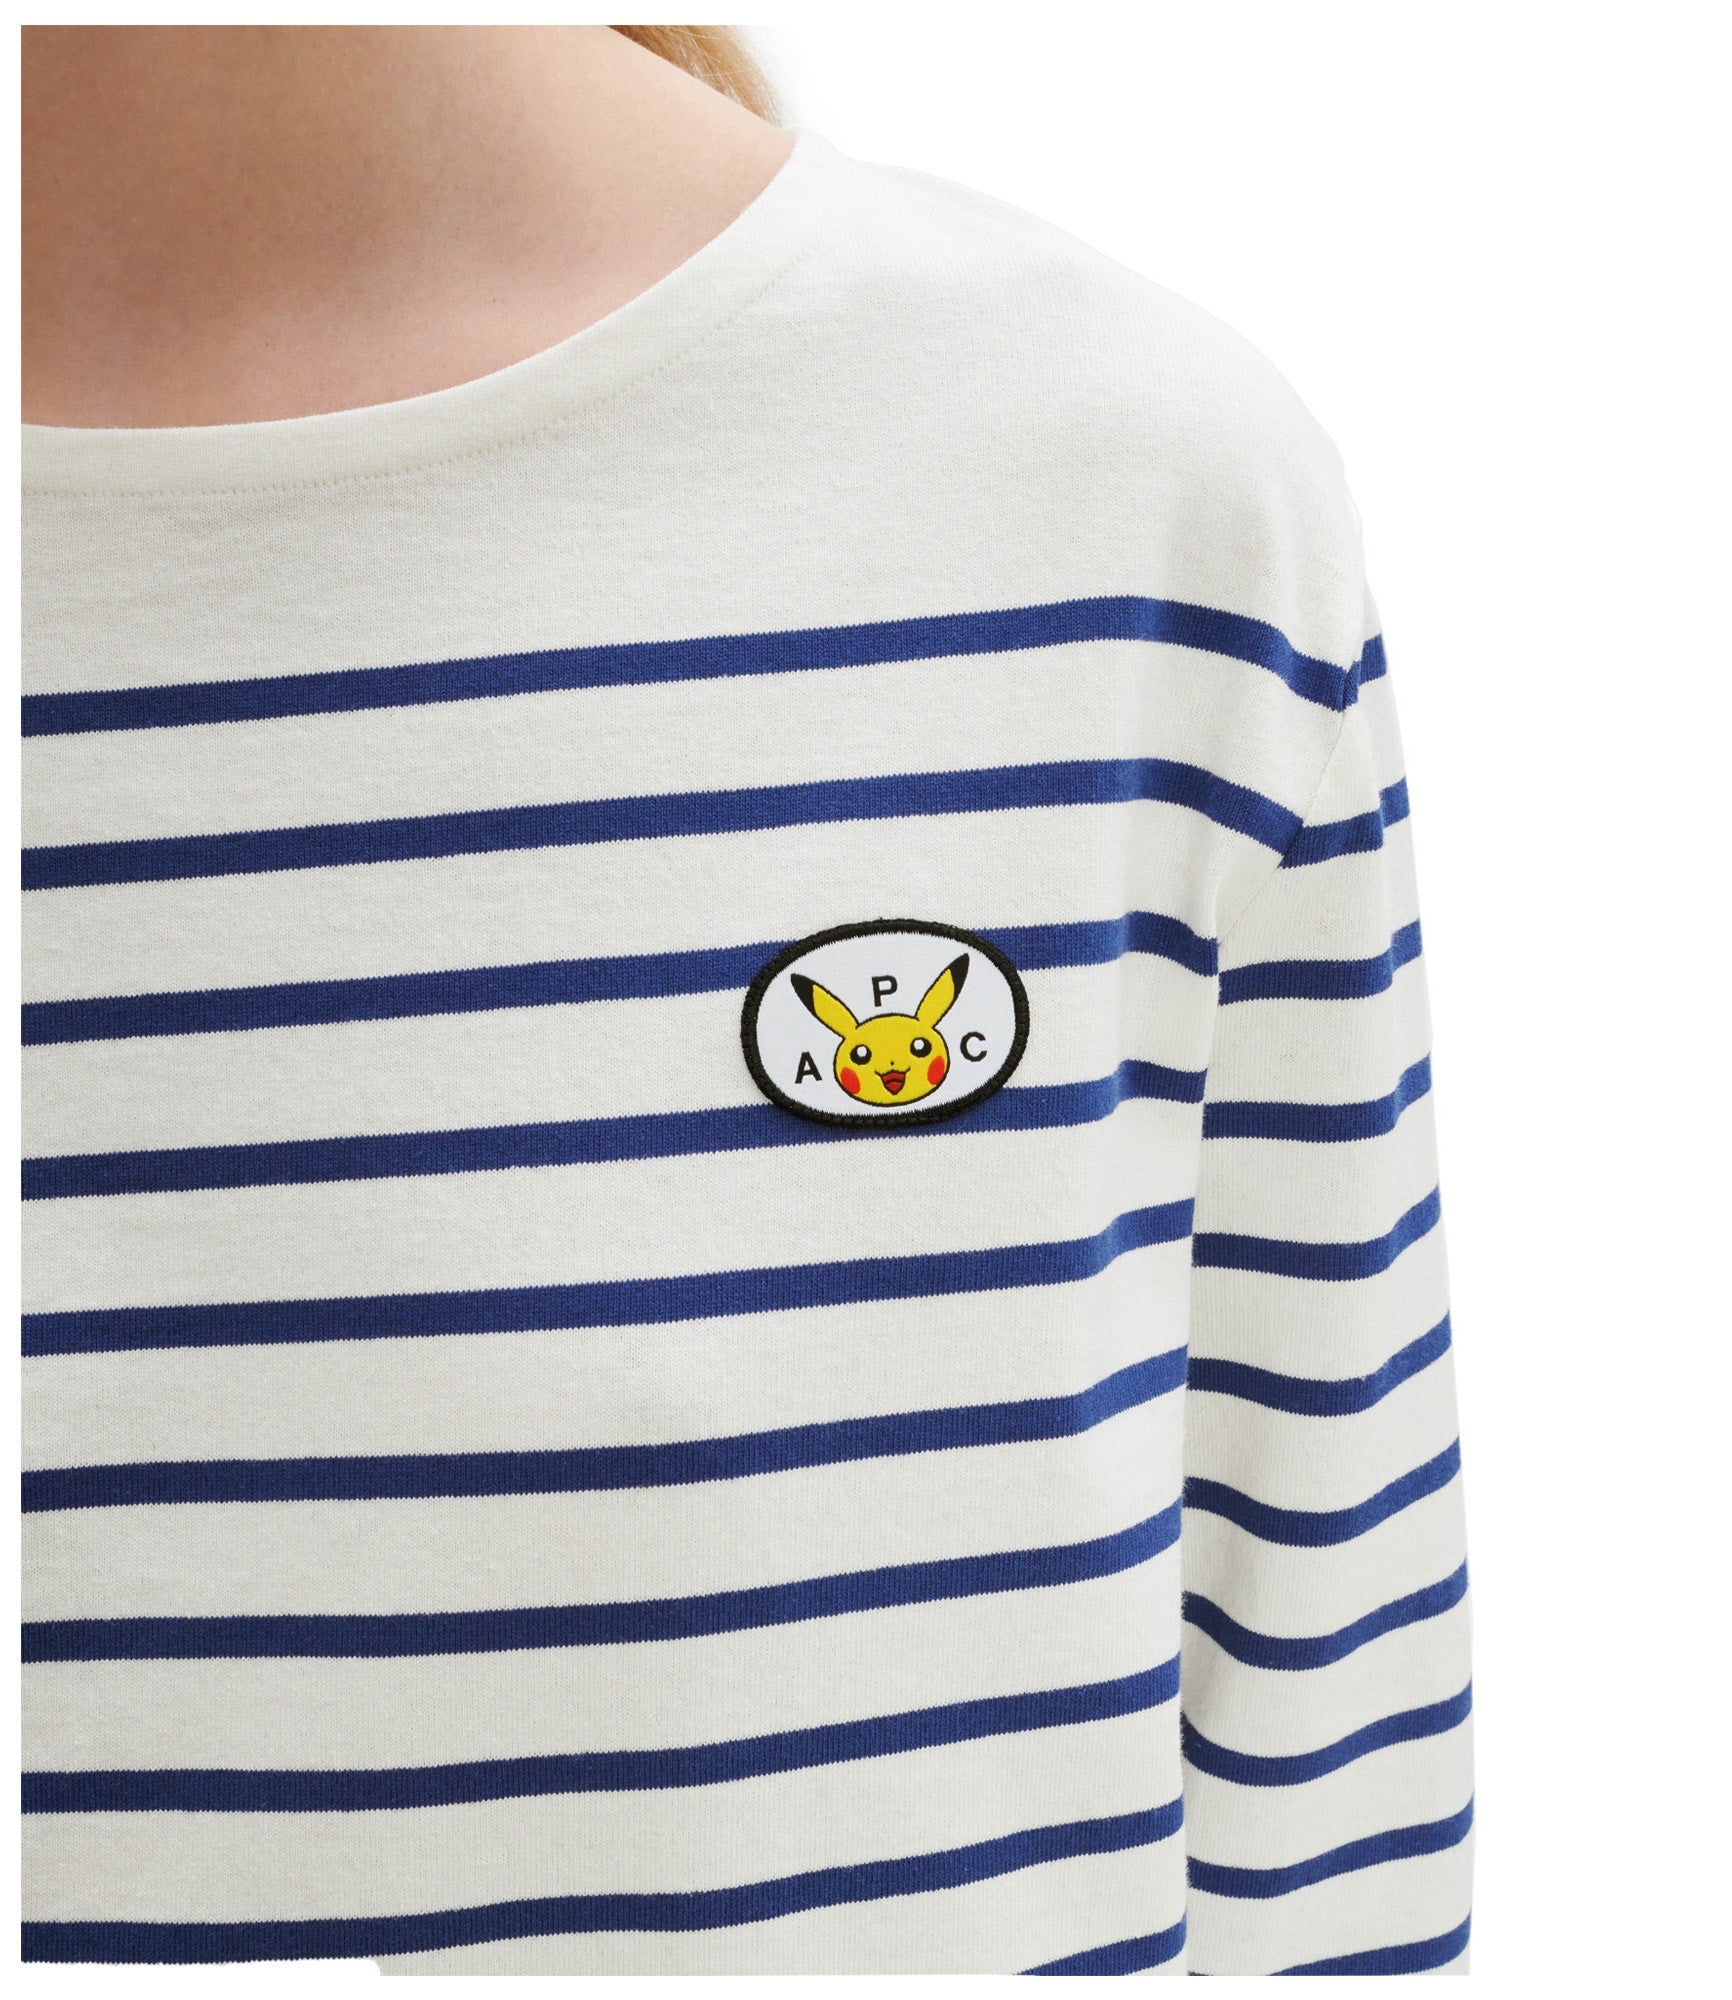 Pokémon sailor long sleeve T-shirt (Unisex) - 9